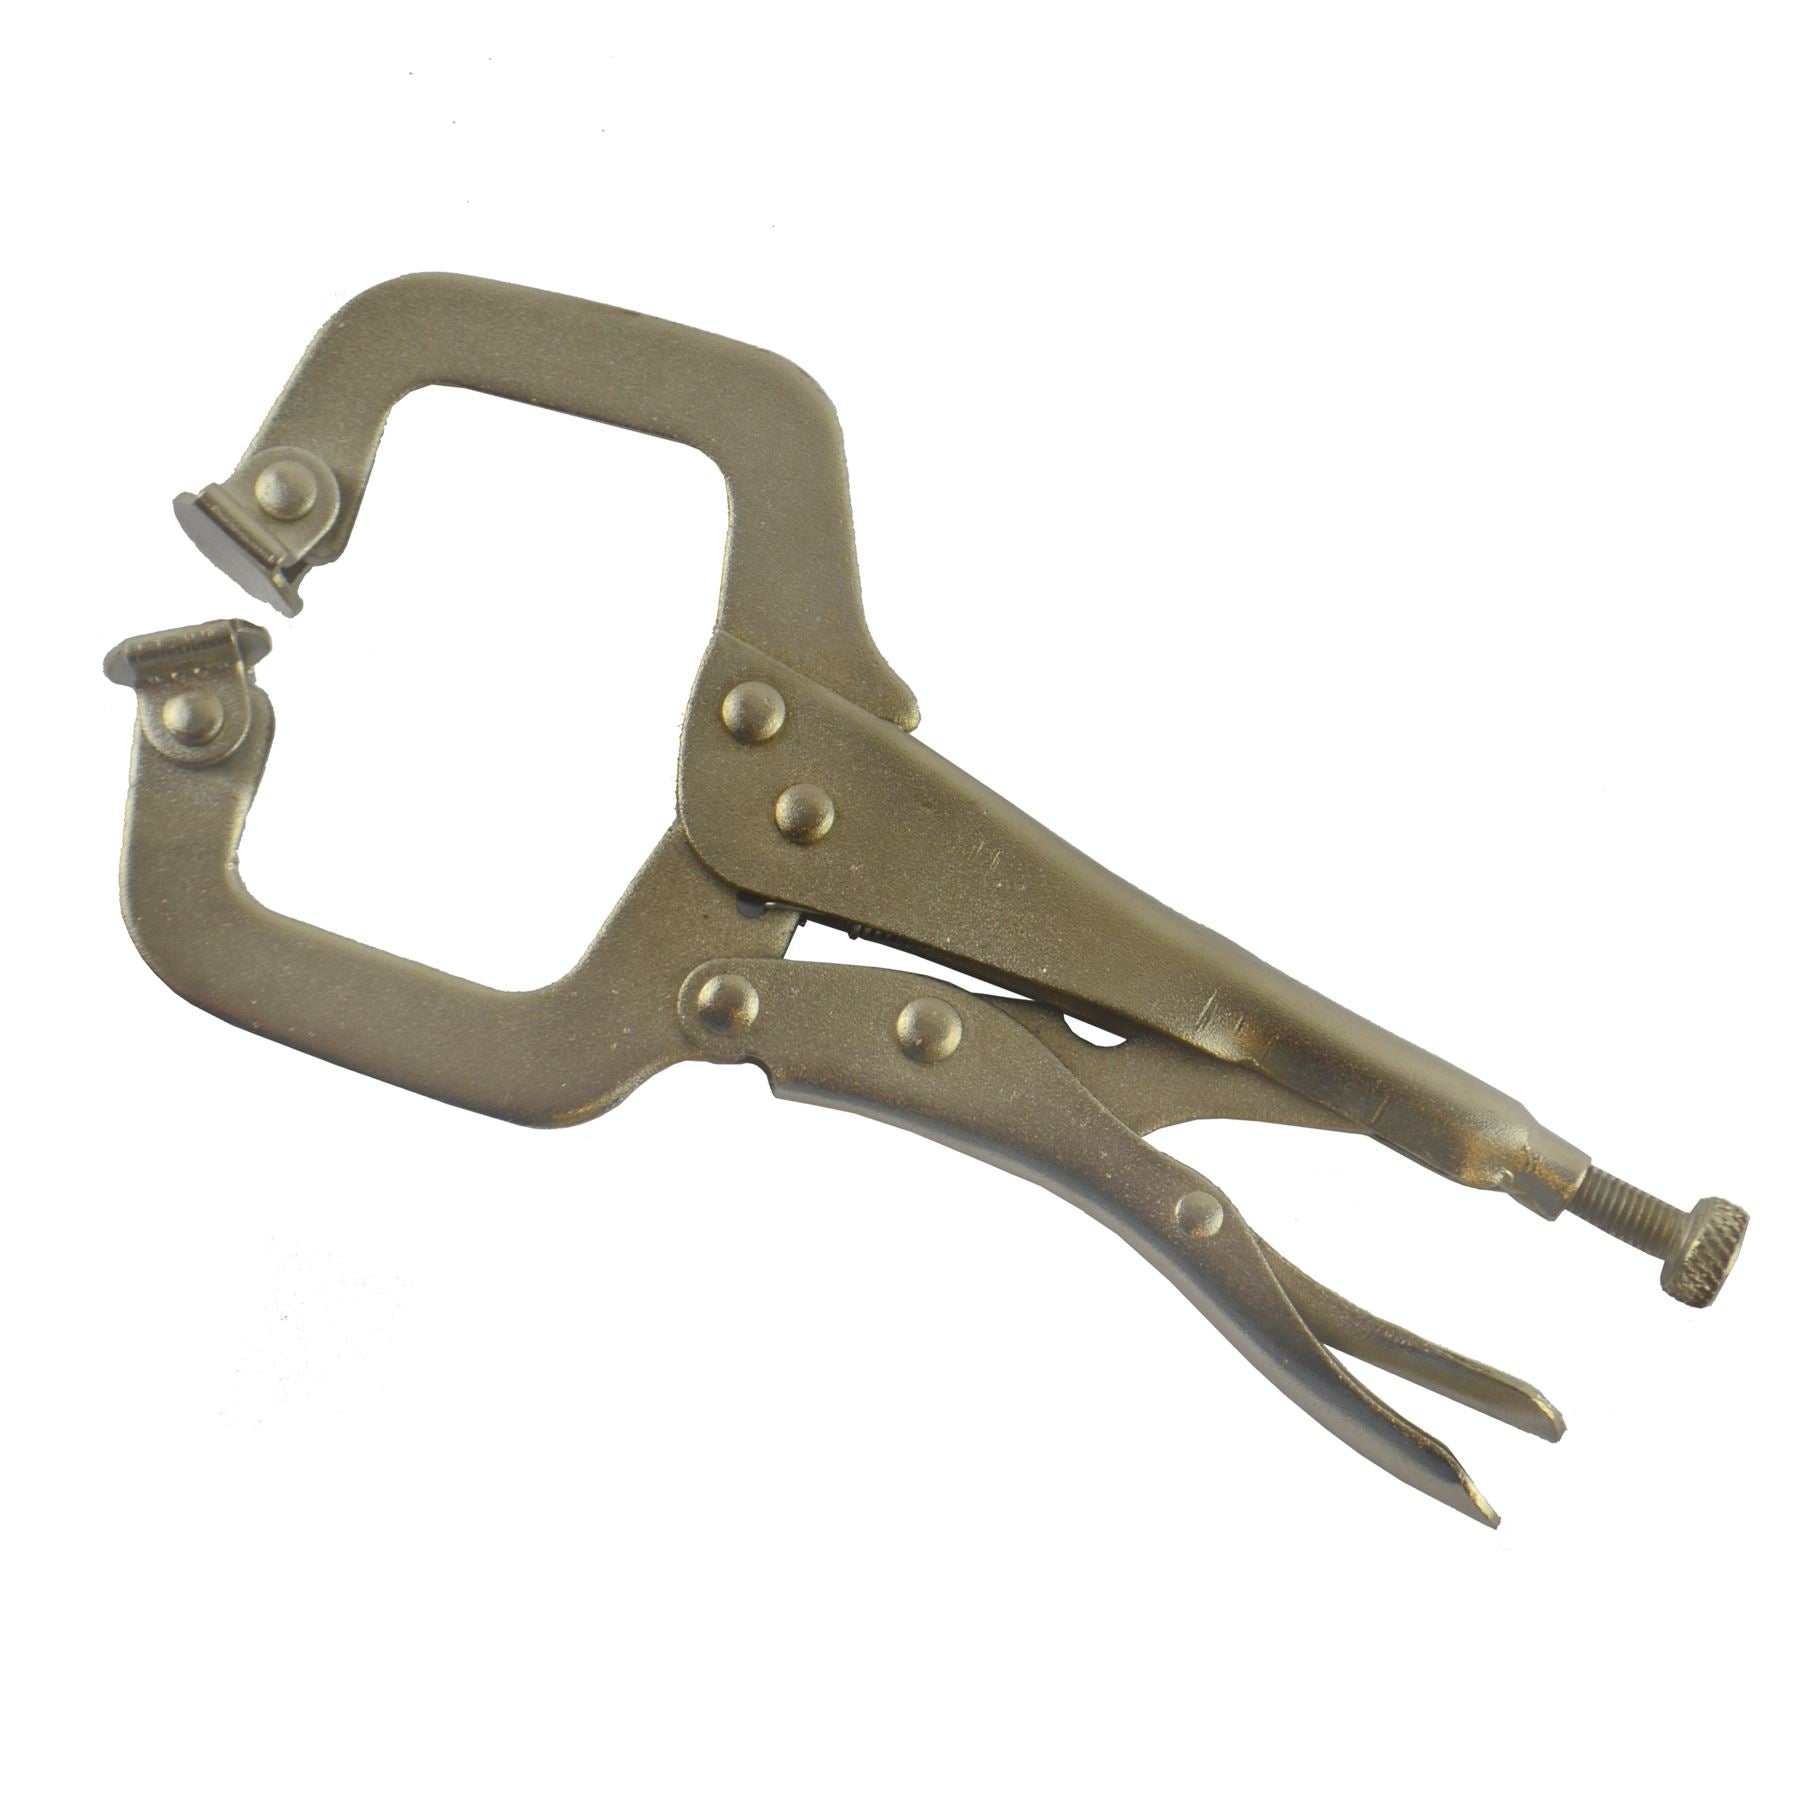 6" Mini Locking C Clamp / Fastener / Welding / Mole Grip / Adjustable Vice SIL352